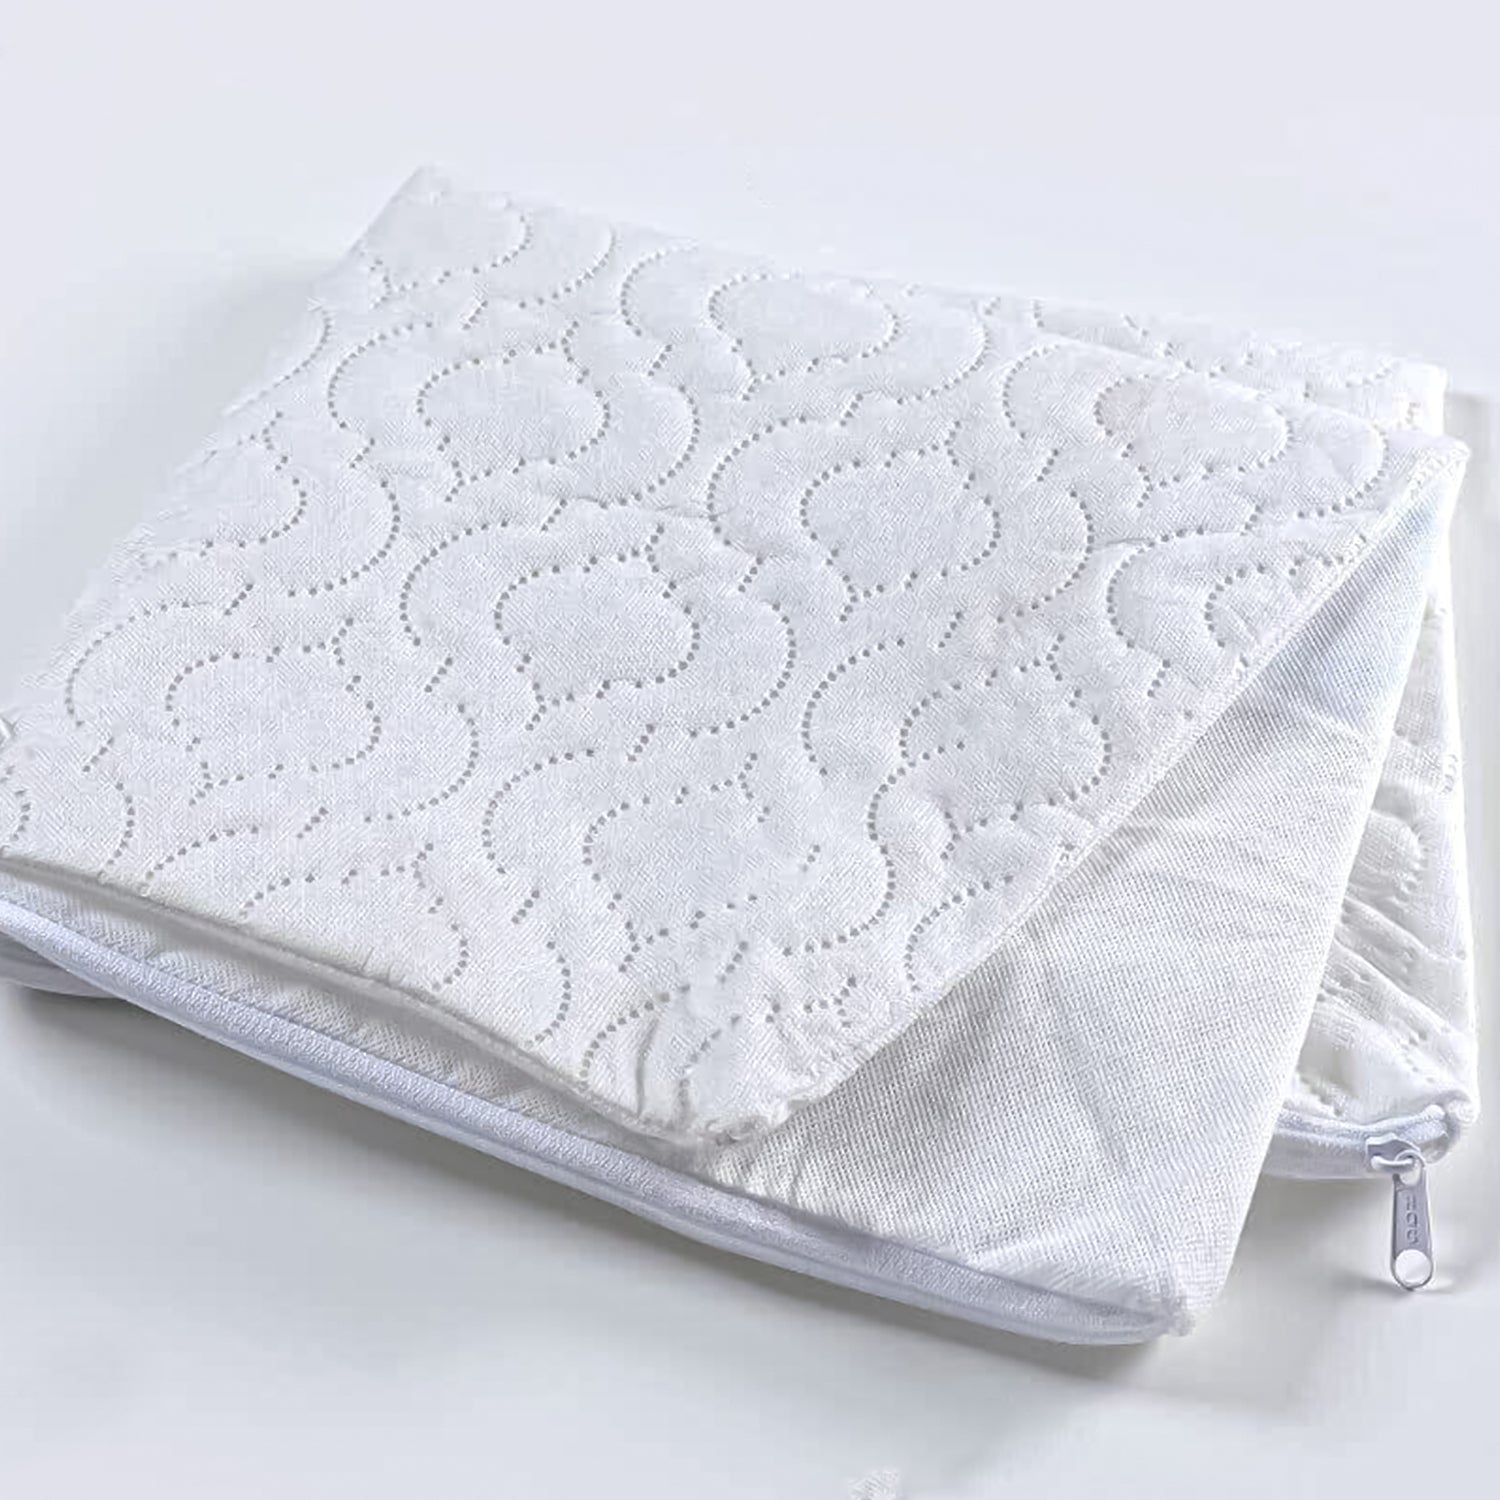 Foam Wedge Pillow uk